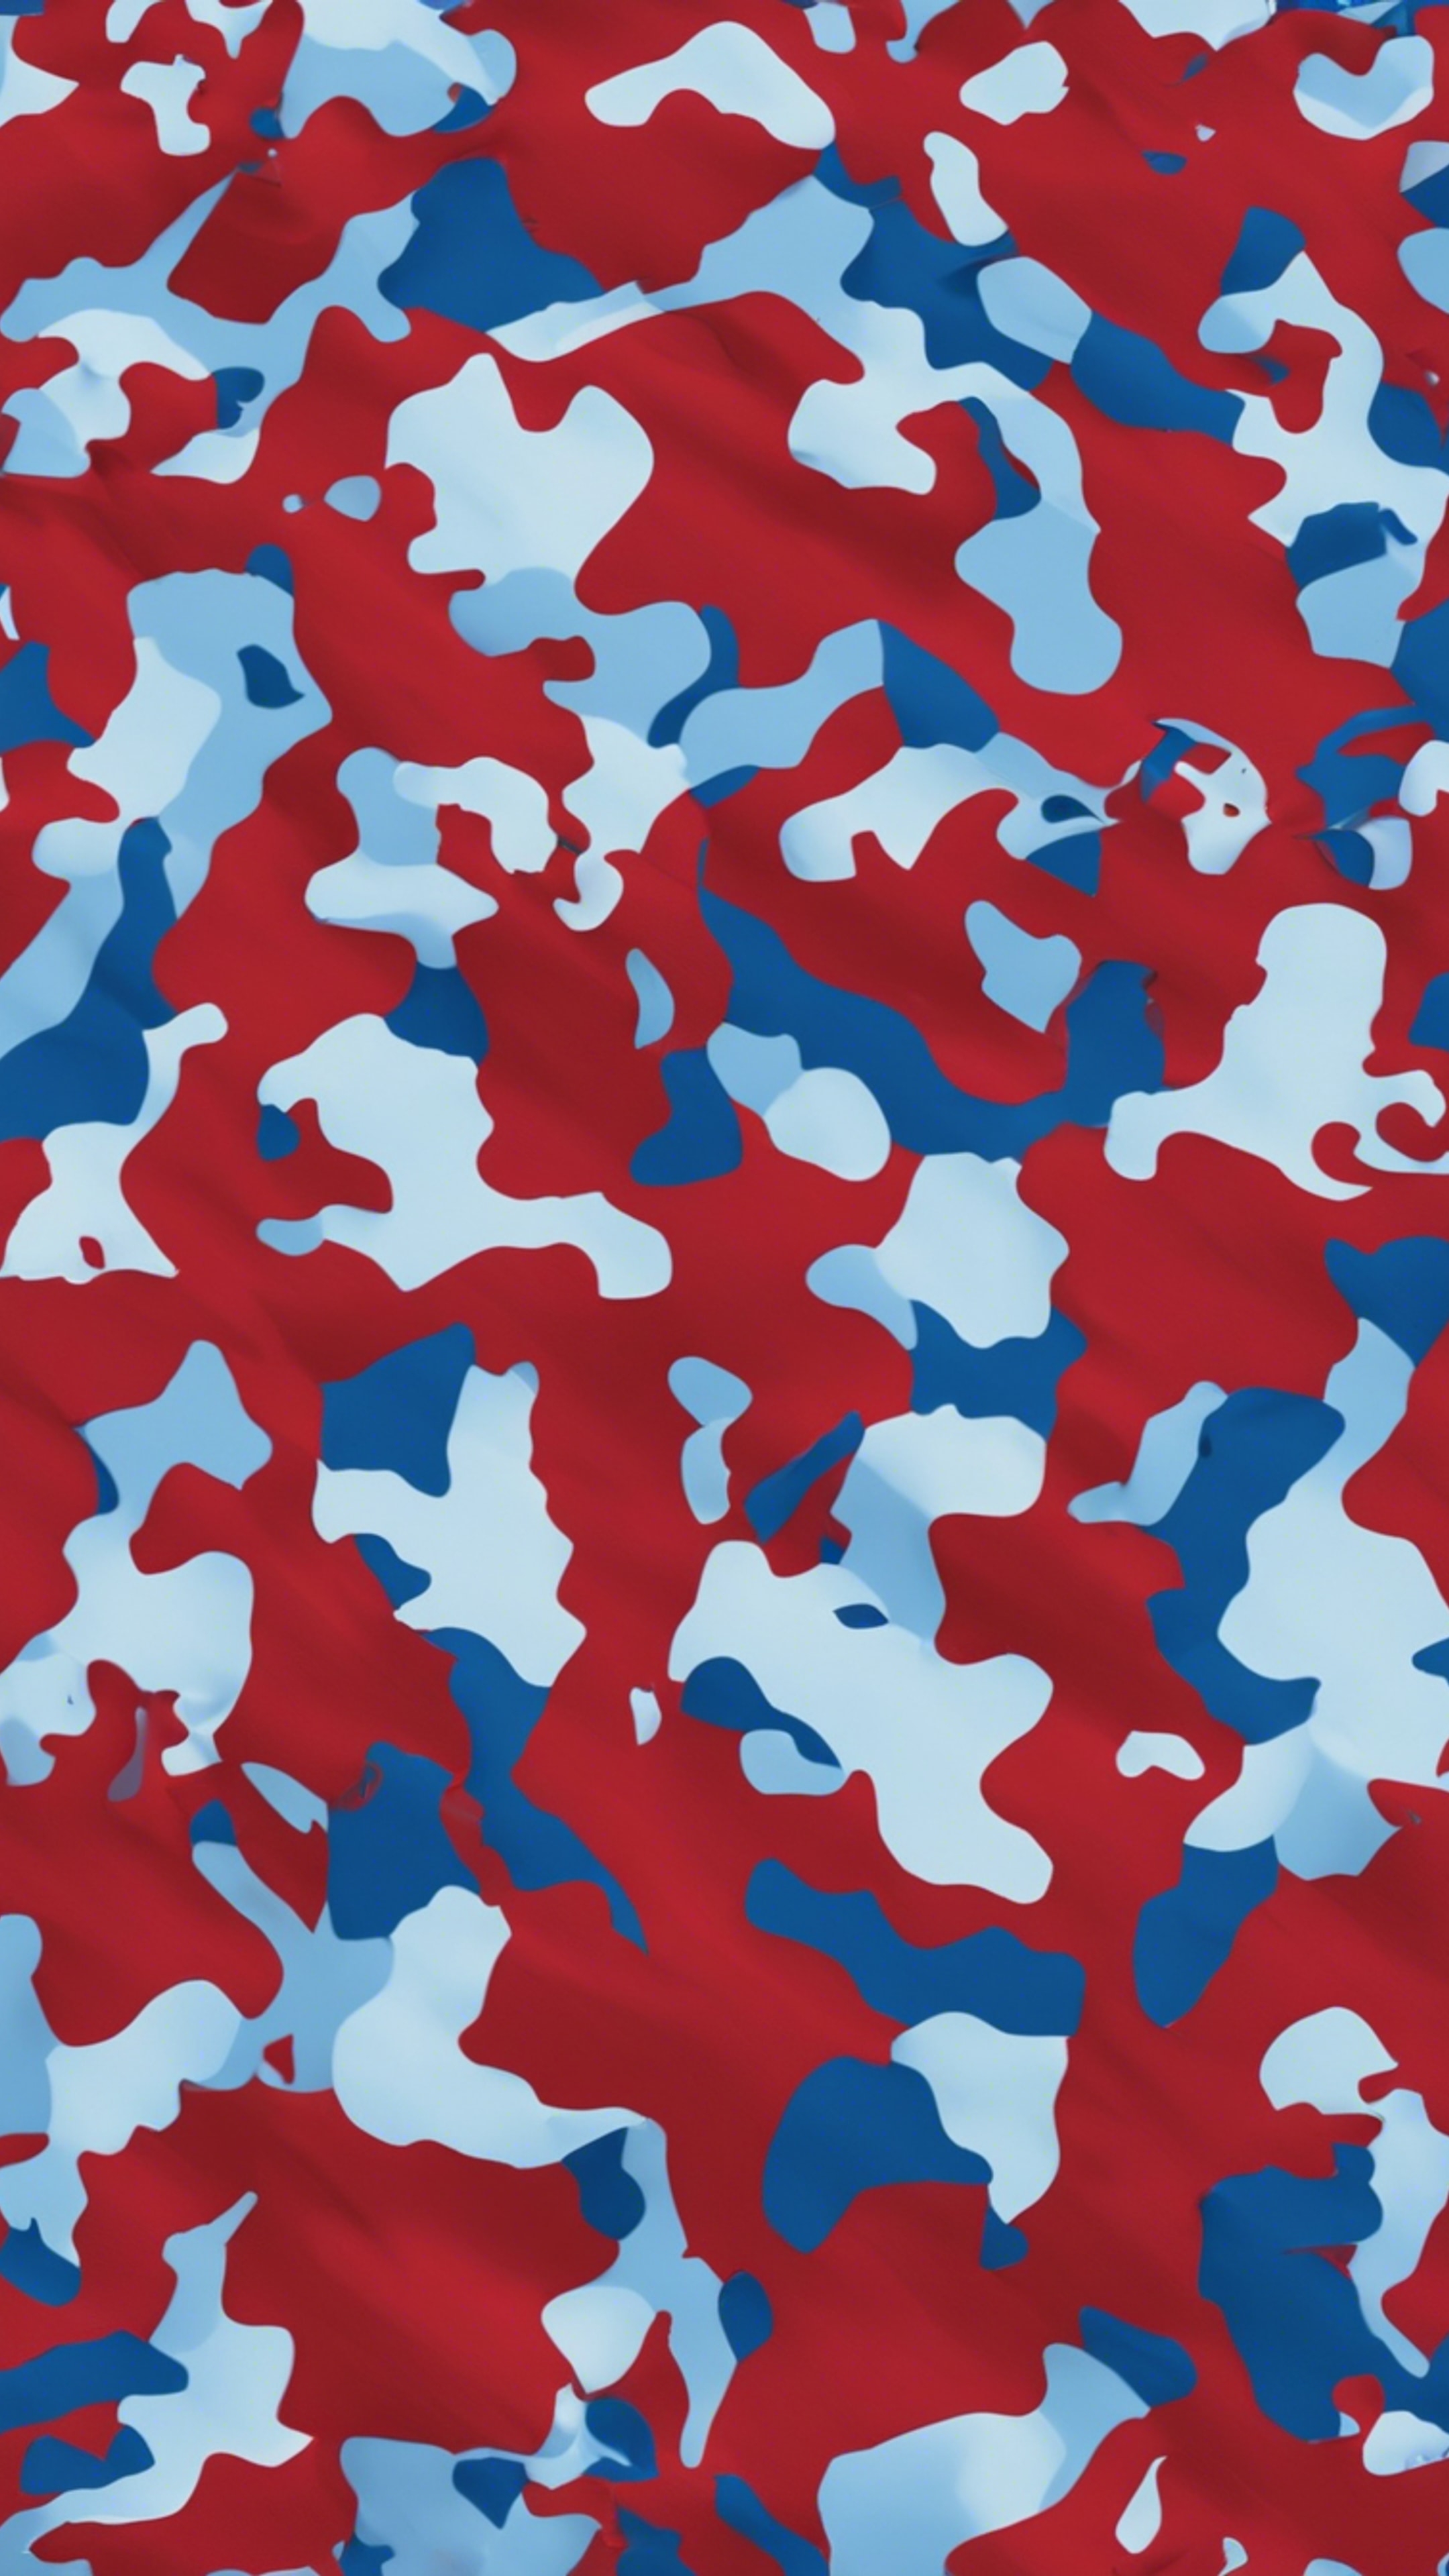 A seamles pattern of red and blue camouflage. Hintergrund[edd7b72010f24e93b1c5]